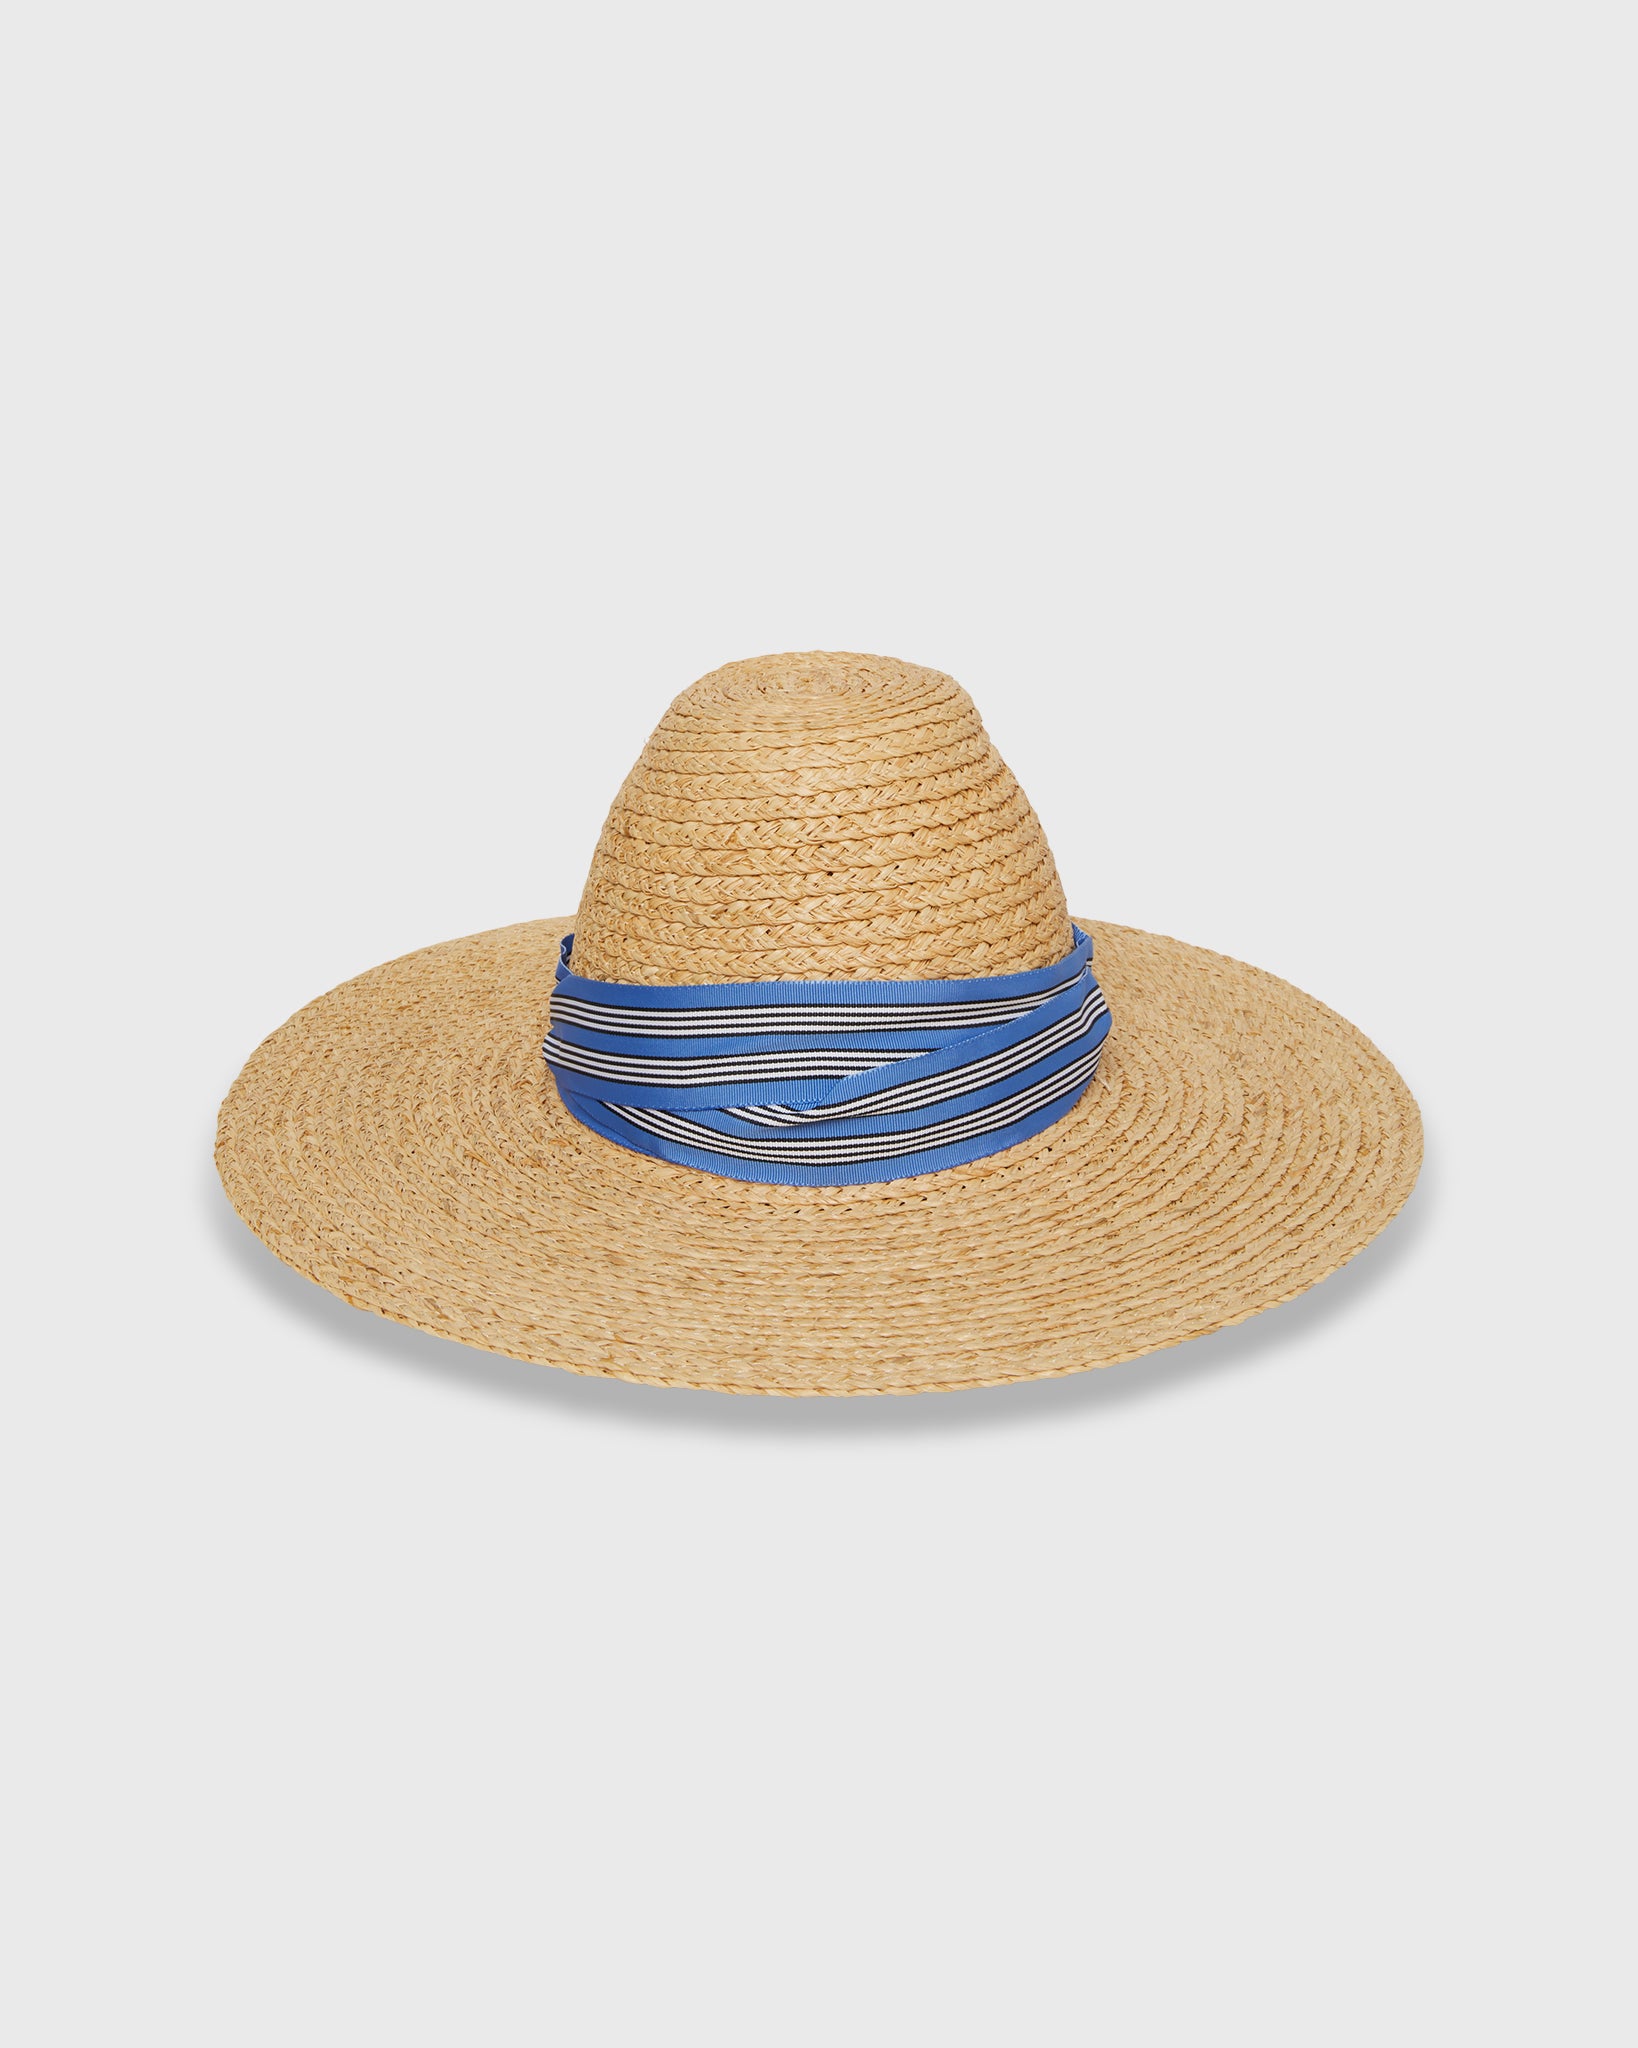 Transat Hat in Natural/Regatta